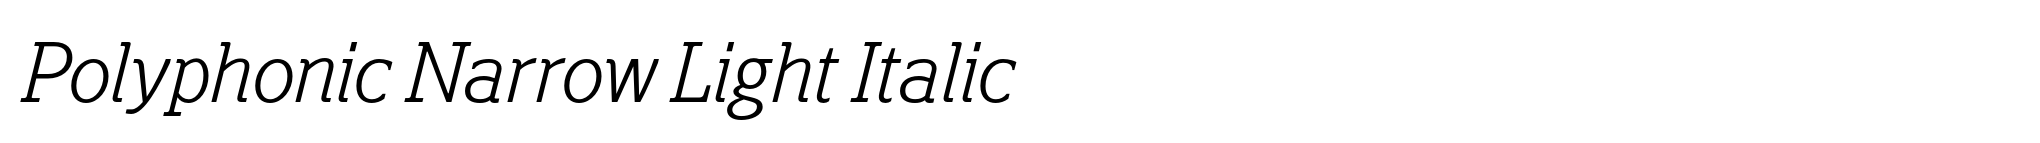 Polyphonic Narrow Light Italic image